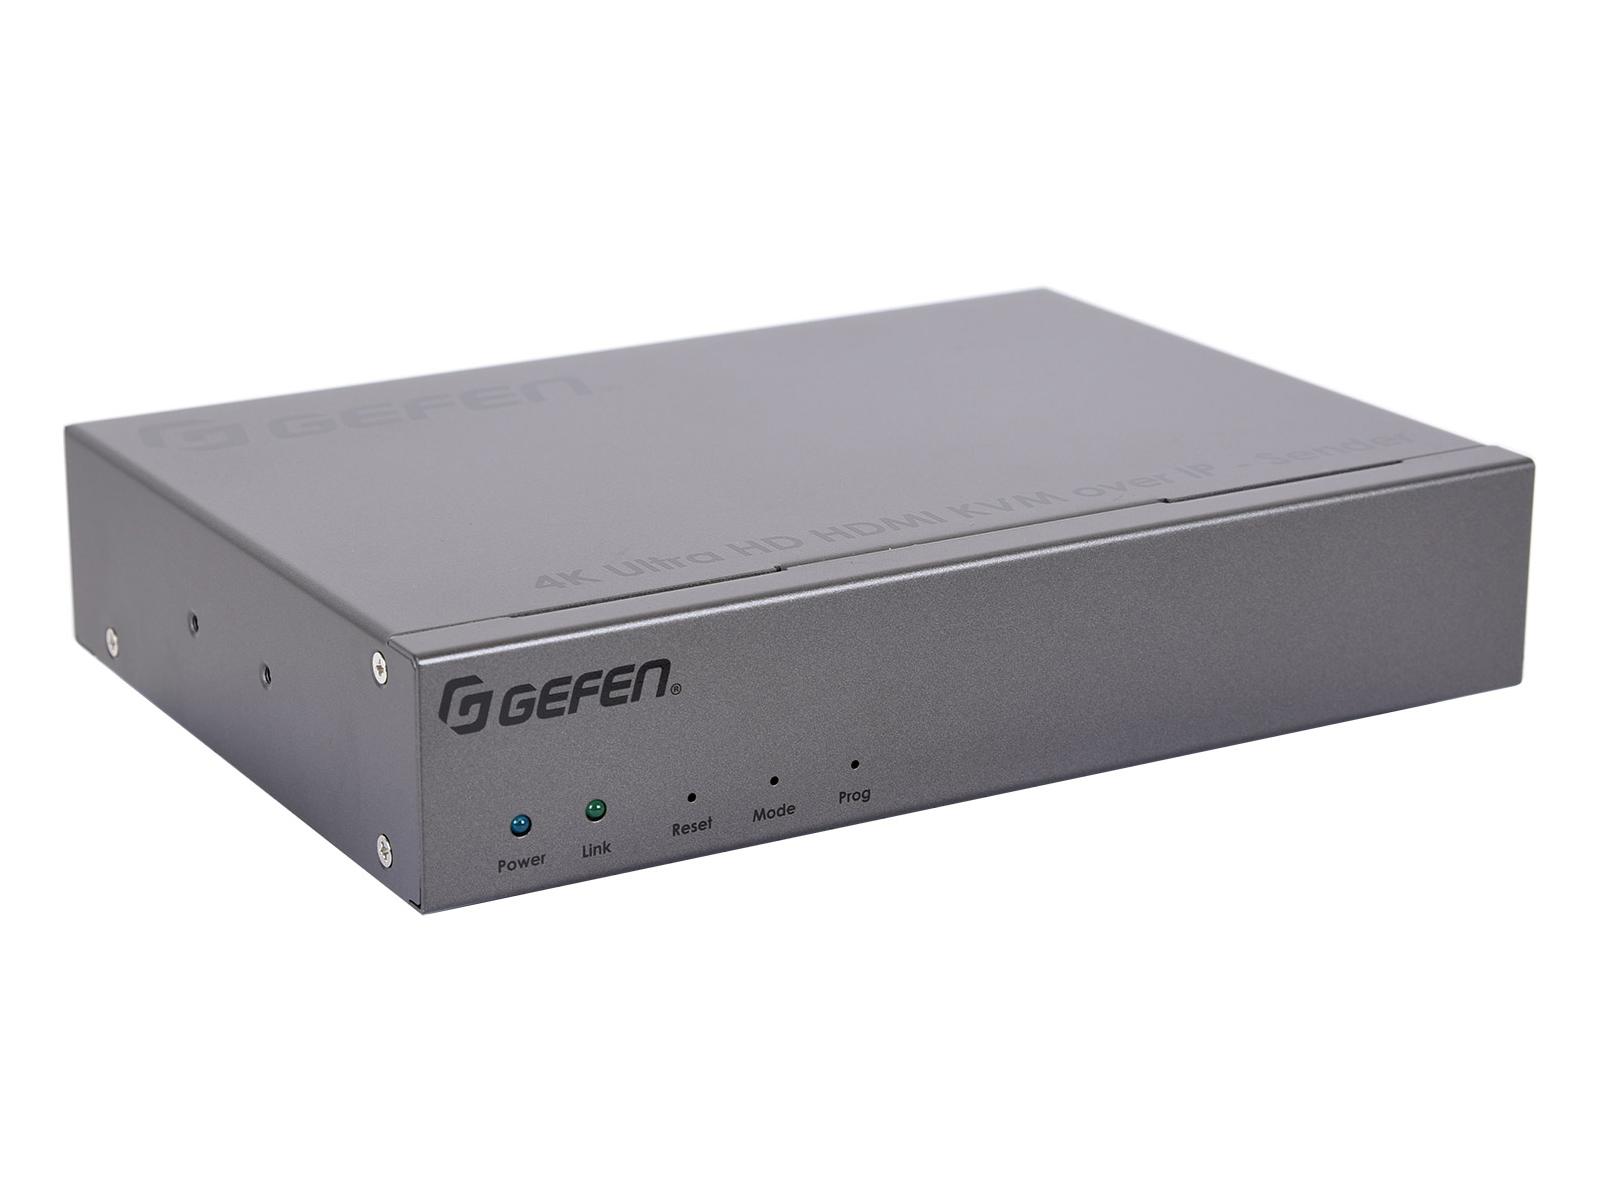 EXT-UHDKA-LANS-TX 4K Ultra HD HDMI KVM over IP Extender (Transmitter) by Gefen